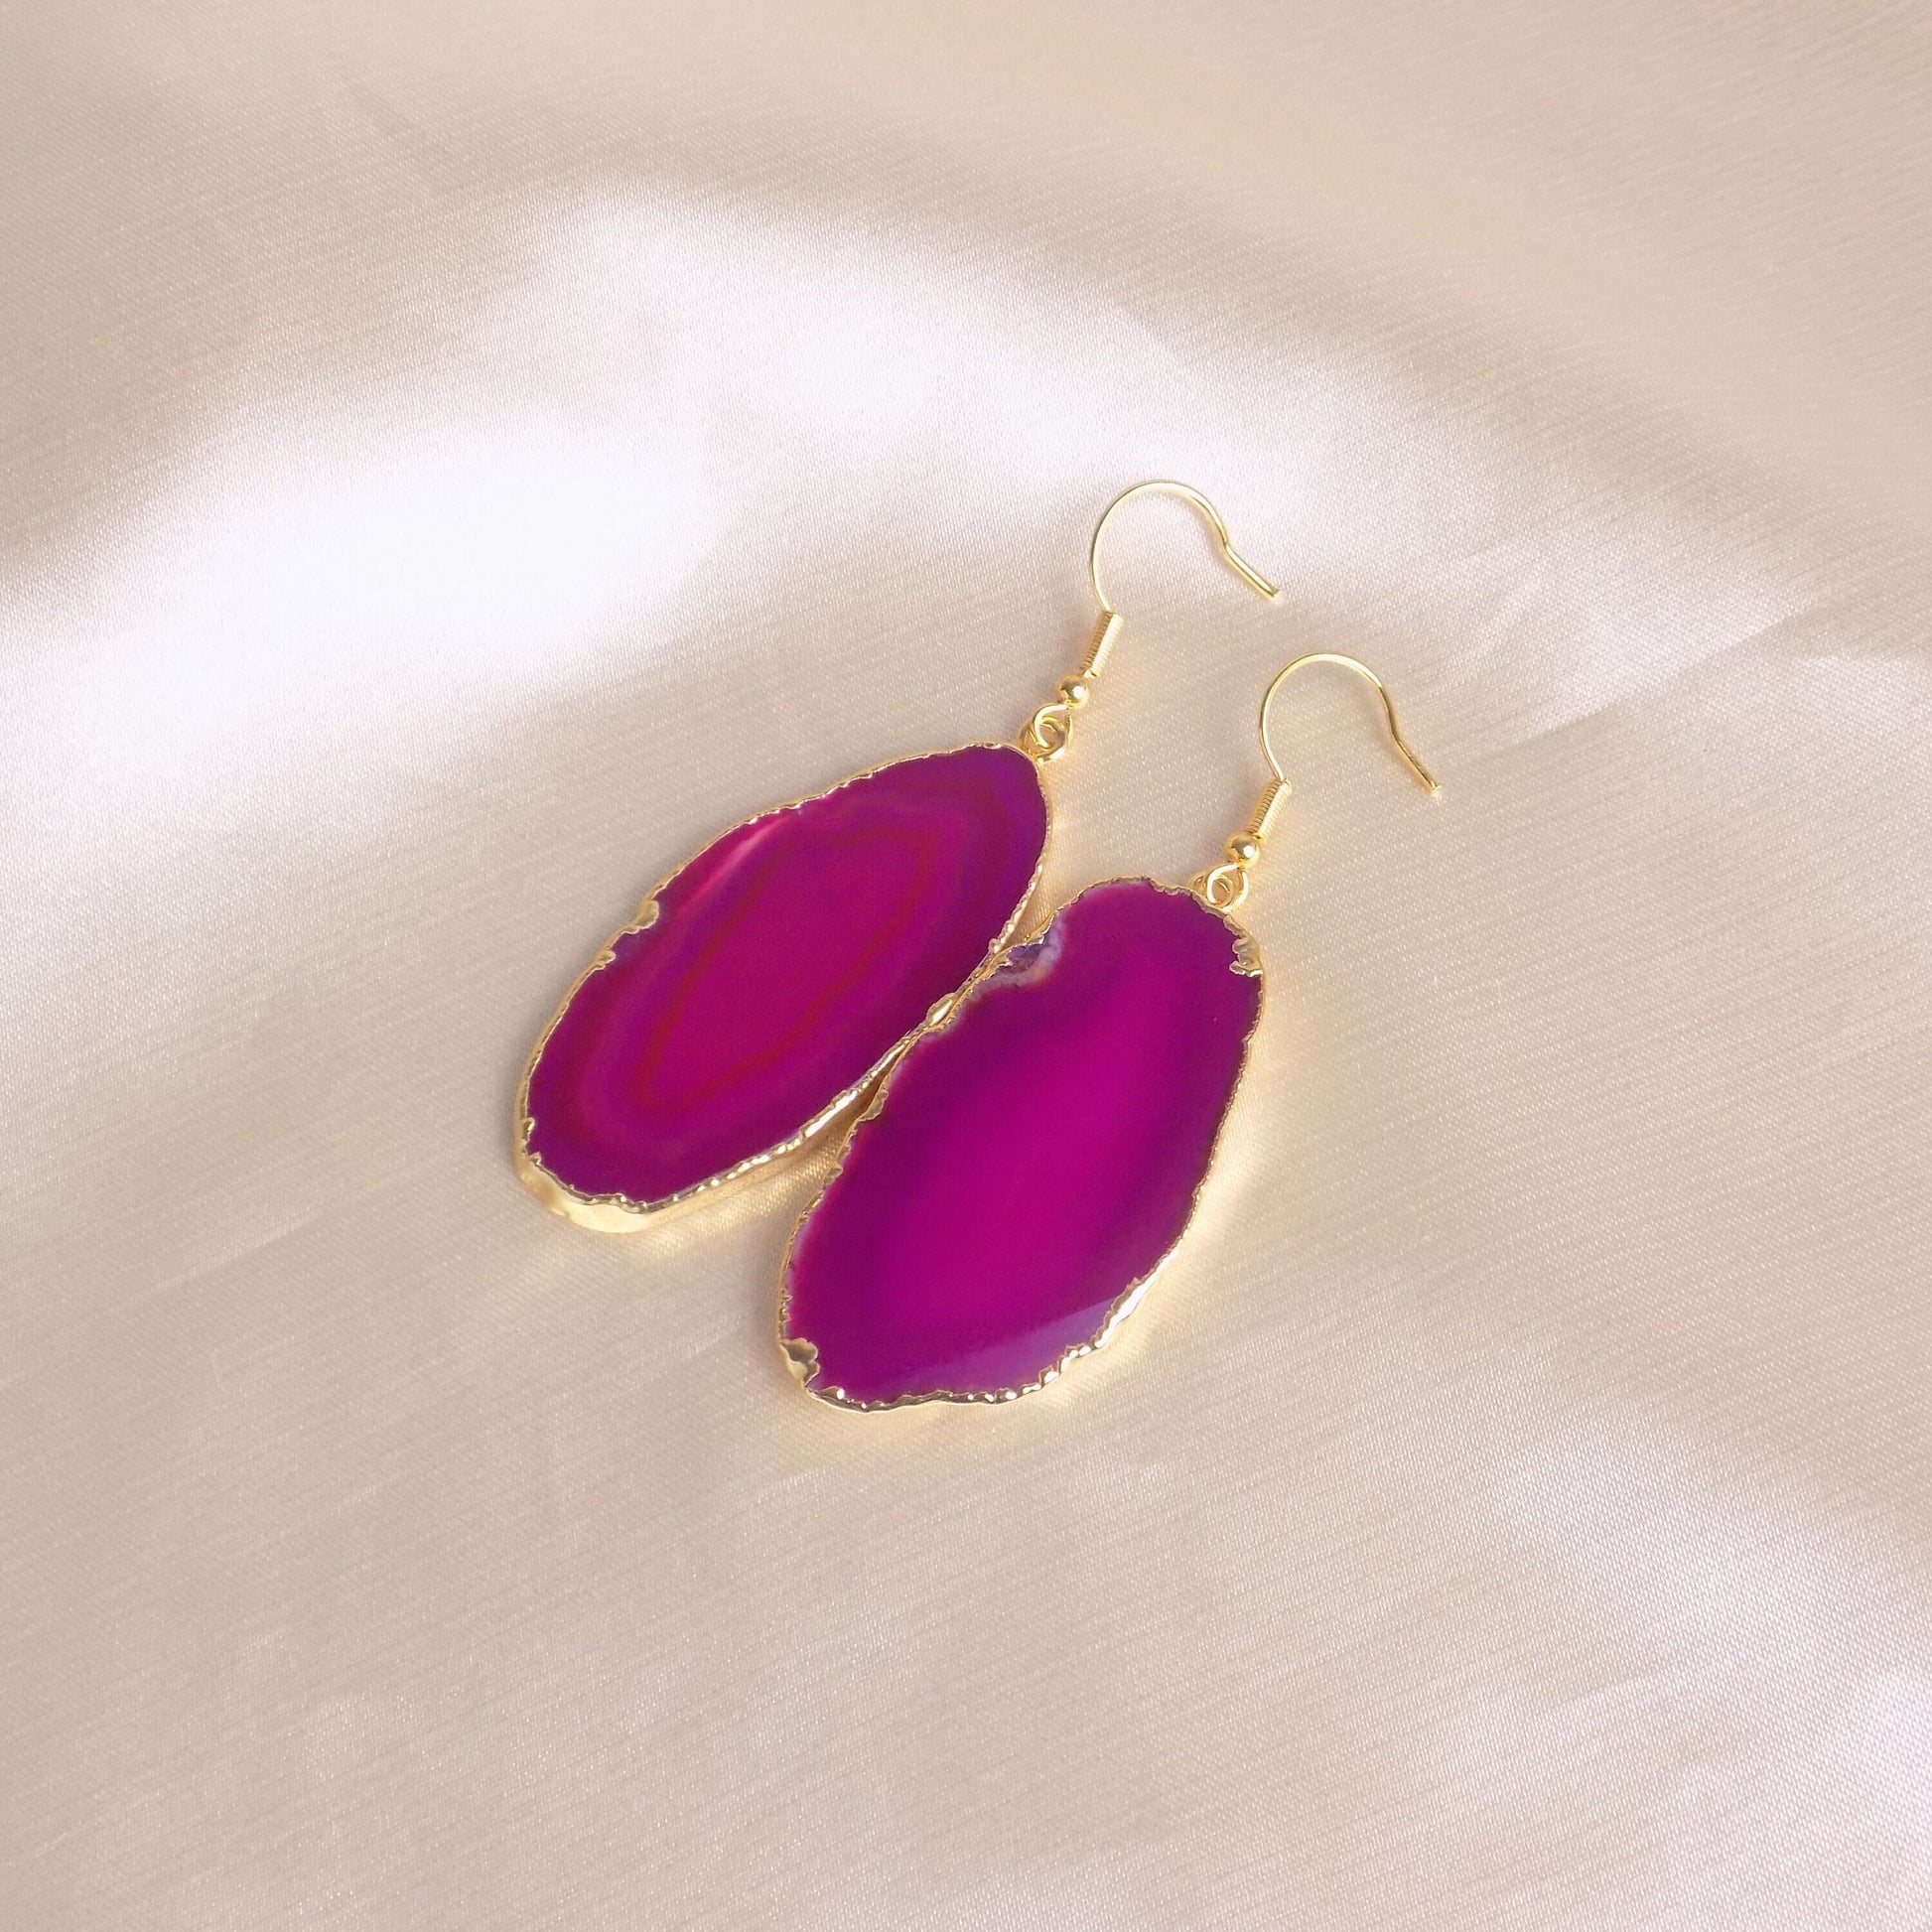 Hot Pink Statement Earrings - Sliced Agate Earrings Gold